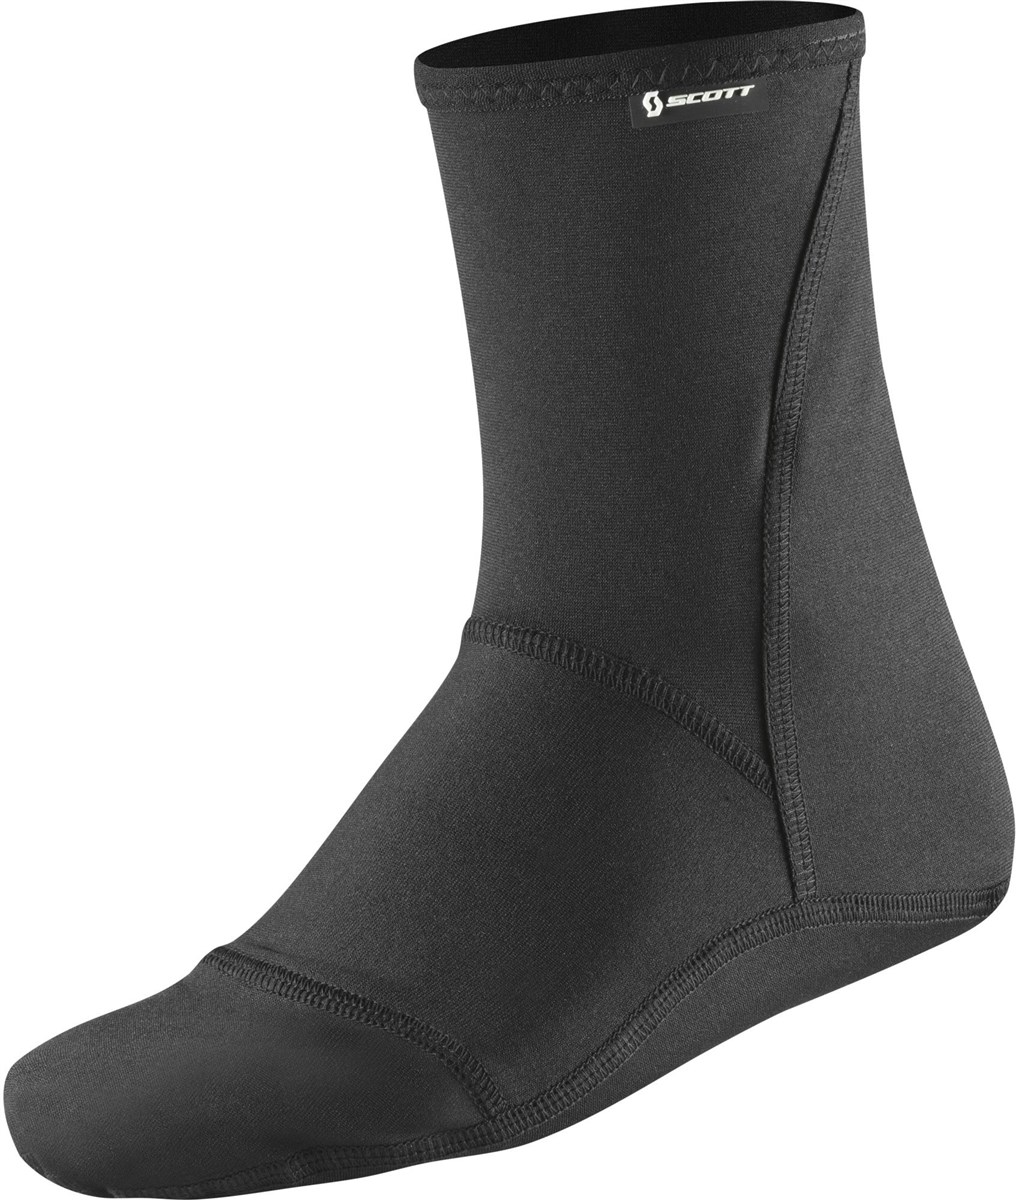 Scott AS 10 Waterproof Sock product image